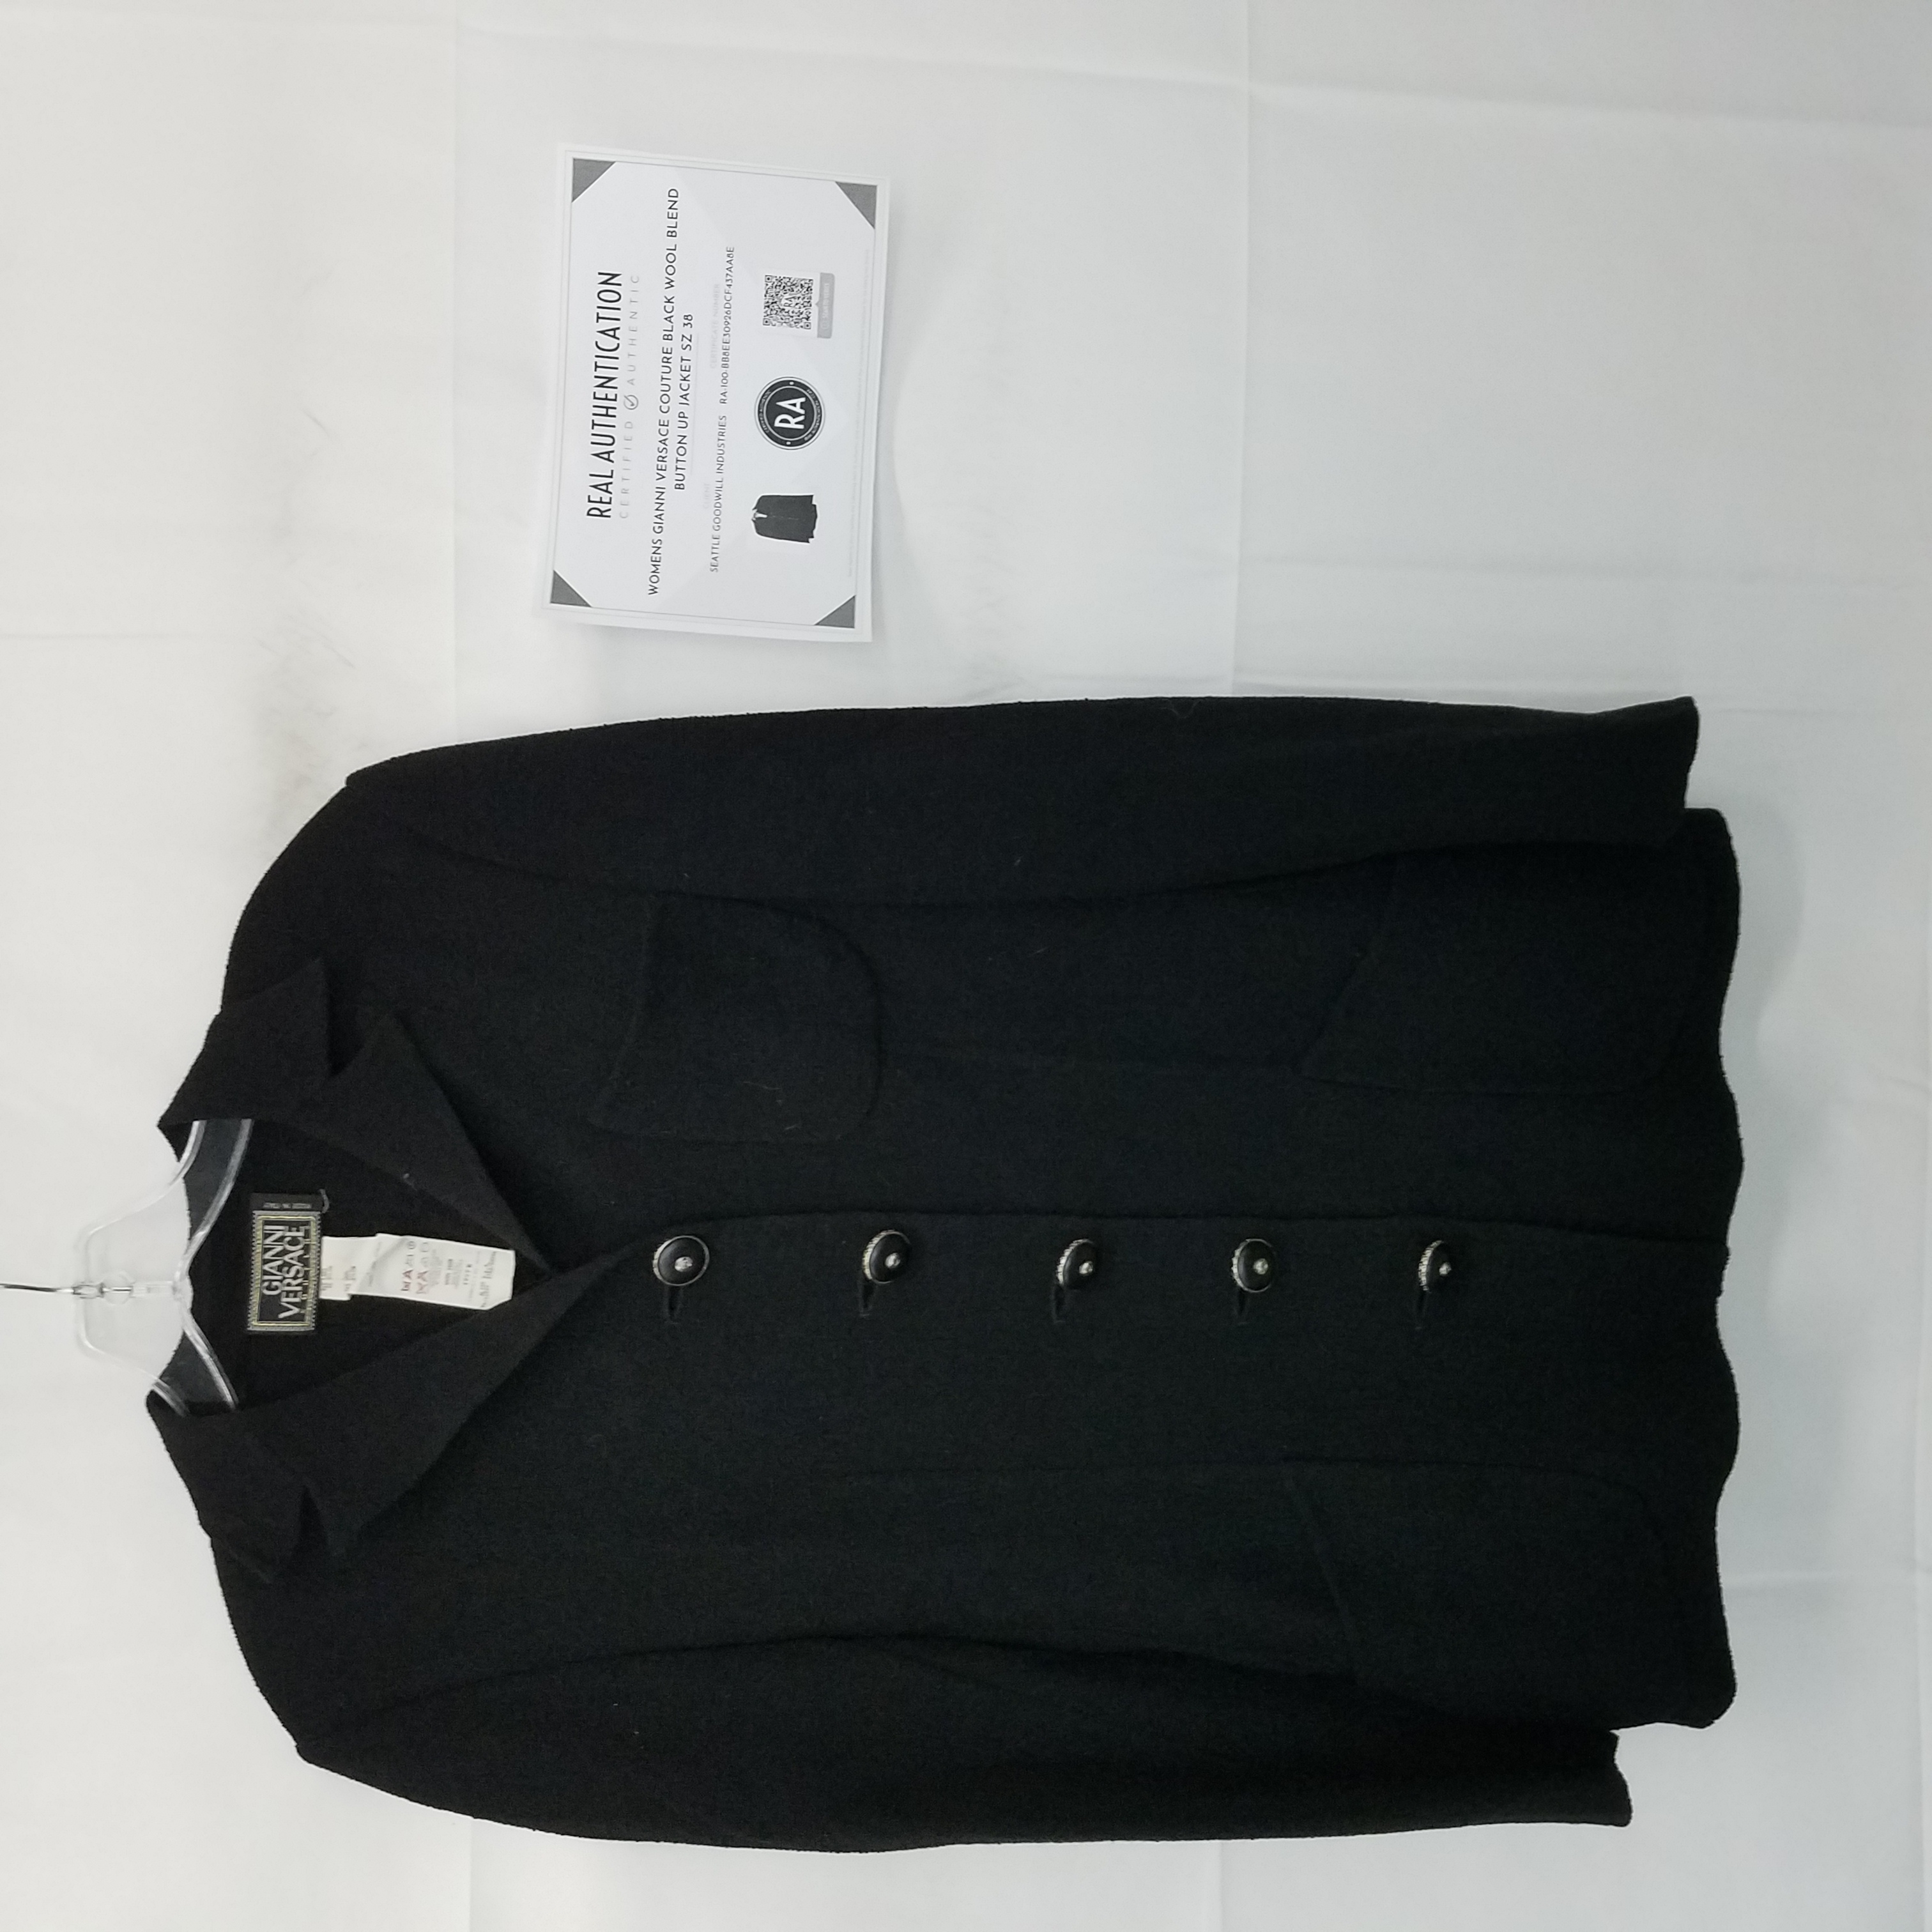 Gianni Versace Authenticated Leather Handbag